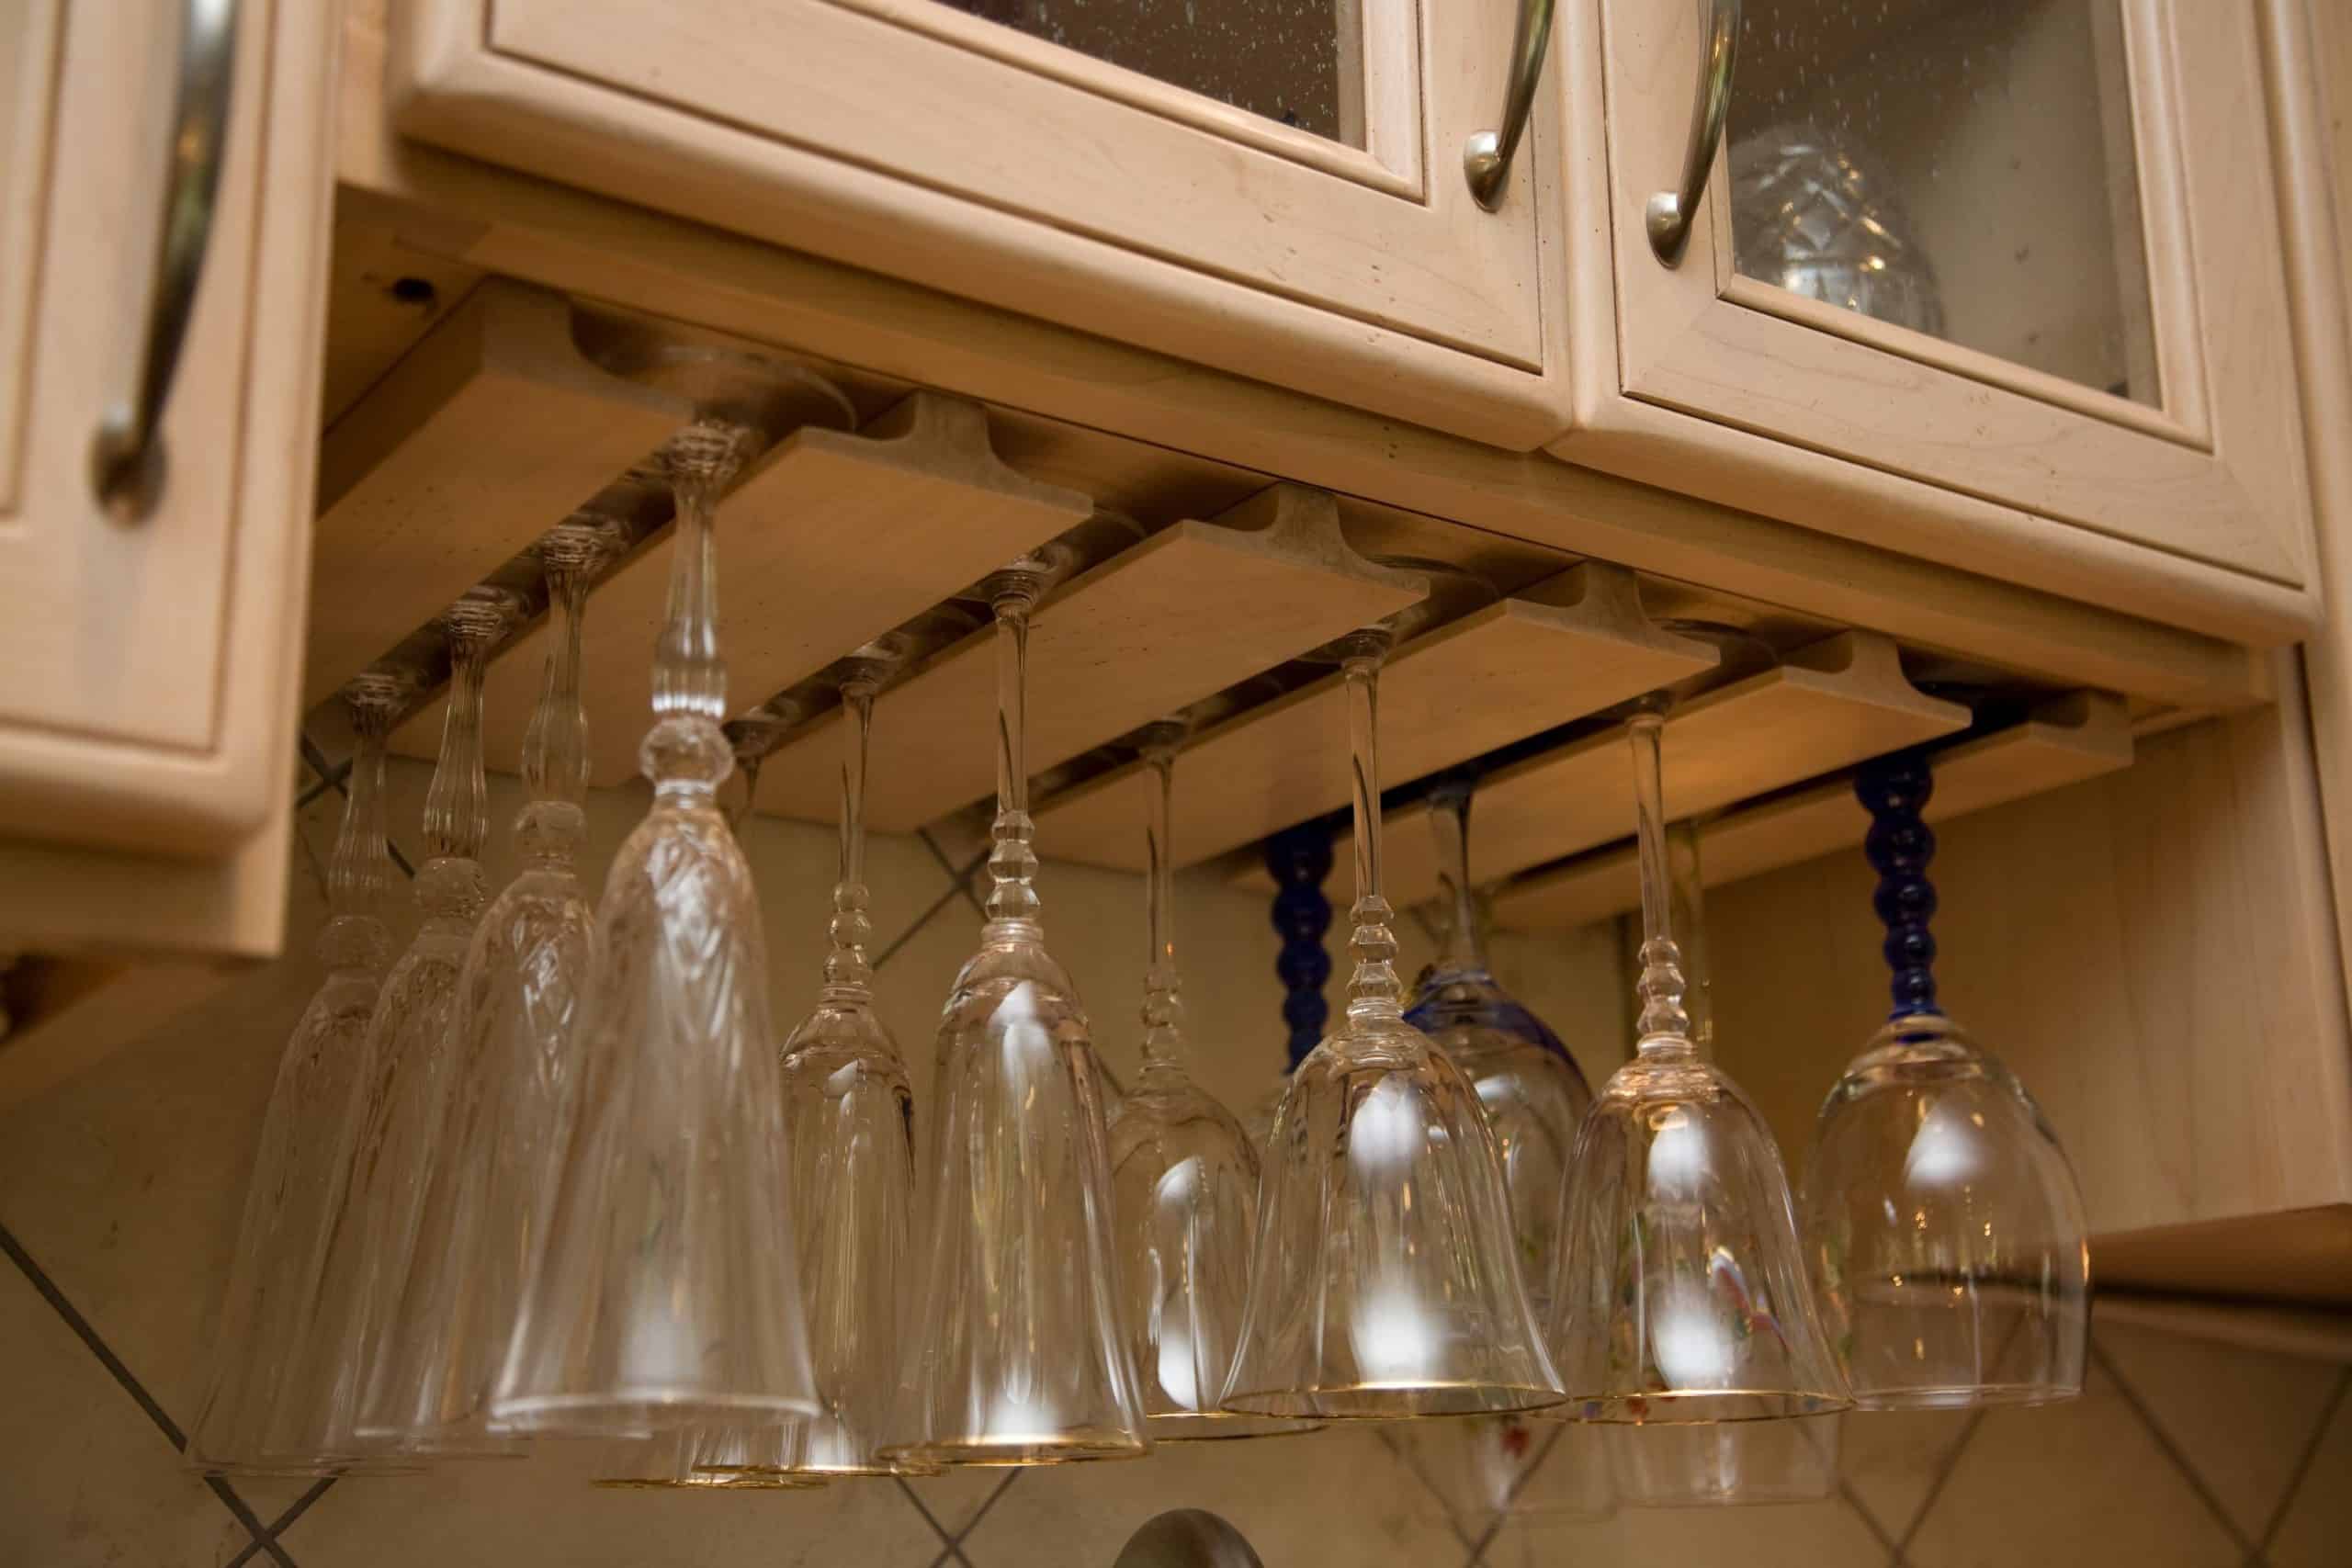 Diy Wine Glass Rack Under The Cabinet